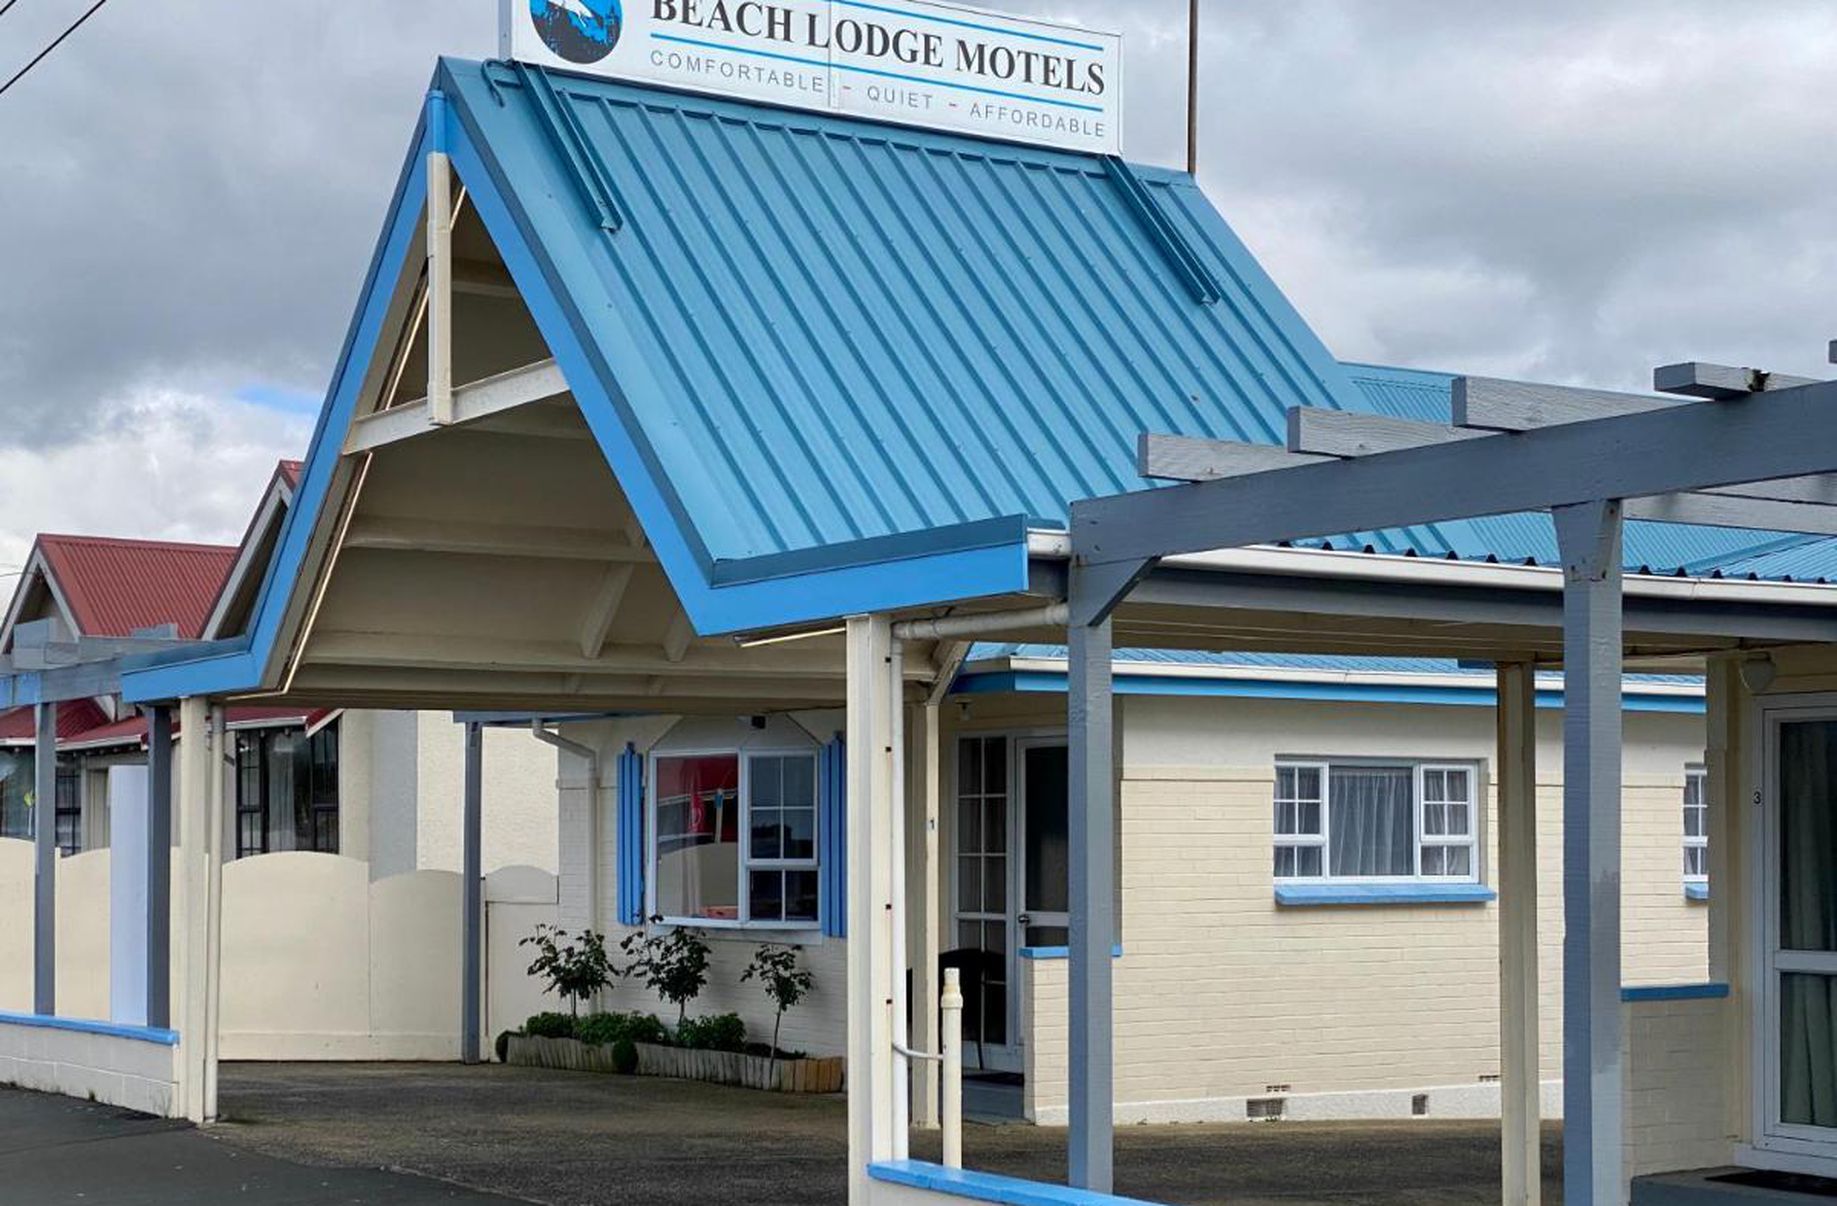 Beach Lodge Motels